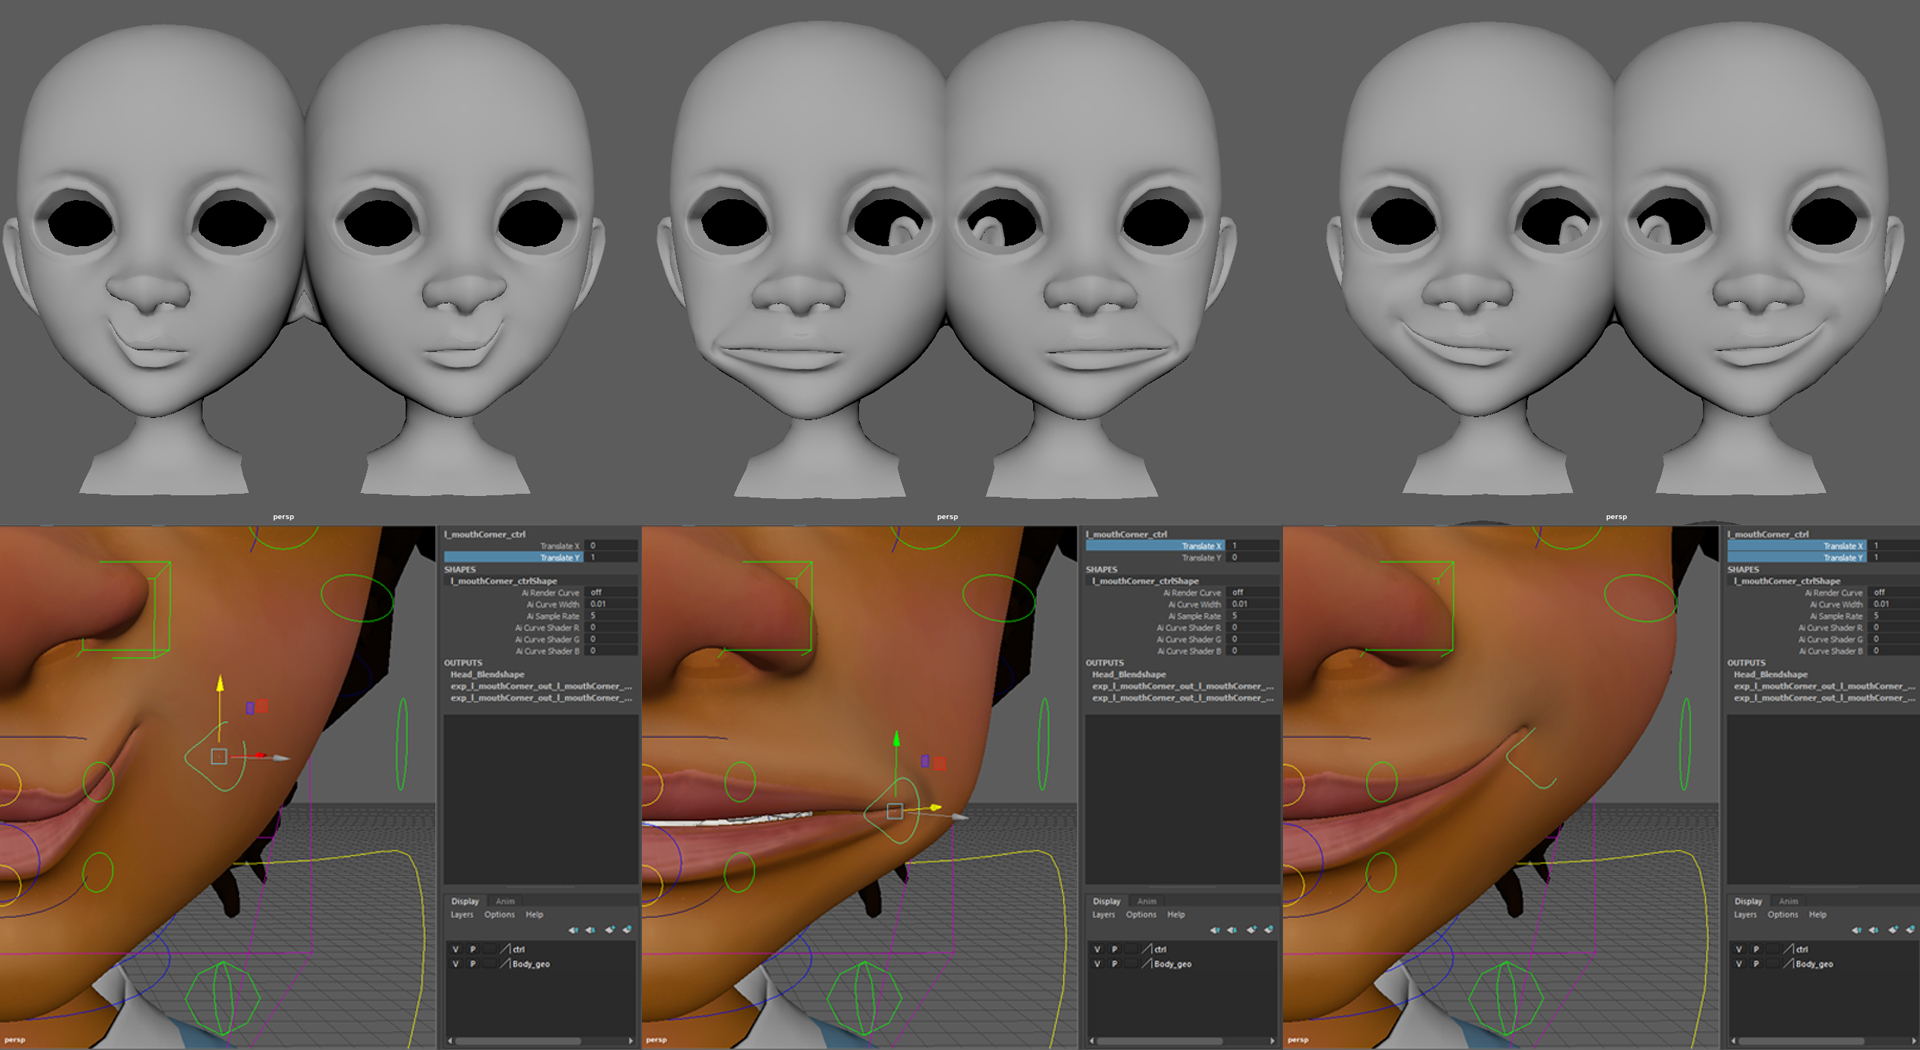 Production Sculpting F.A.C.S Facial Blendshapes for VFX - Rigging Dojo